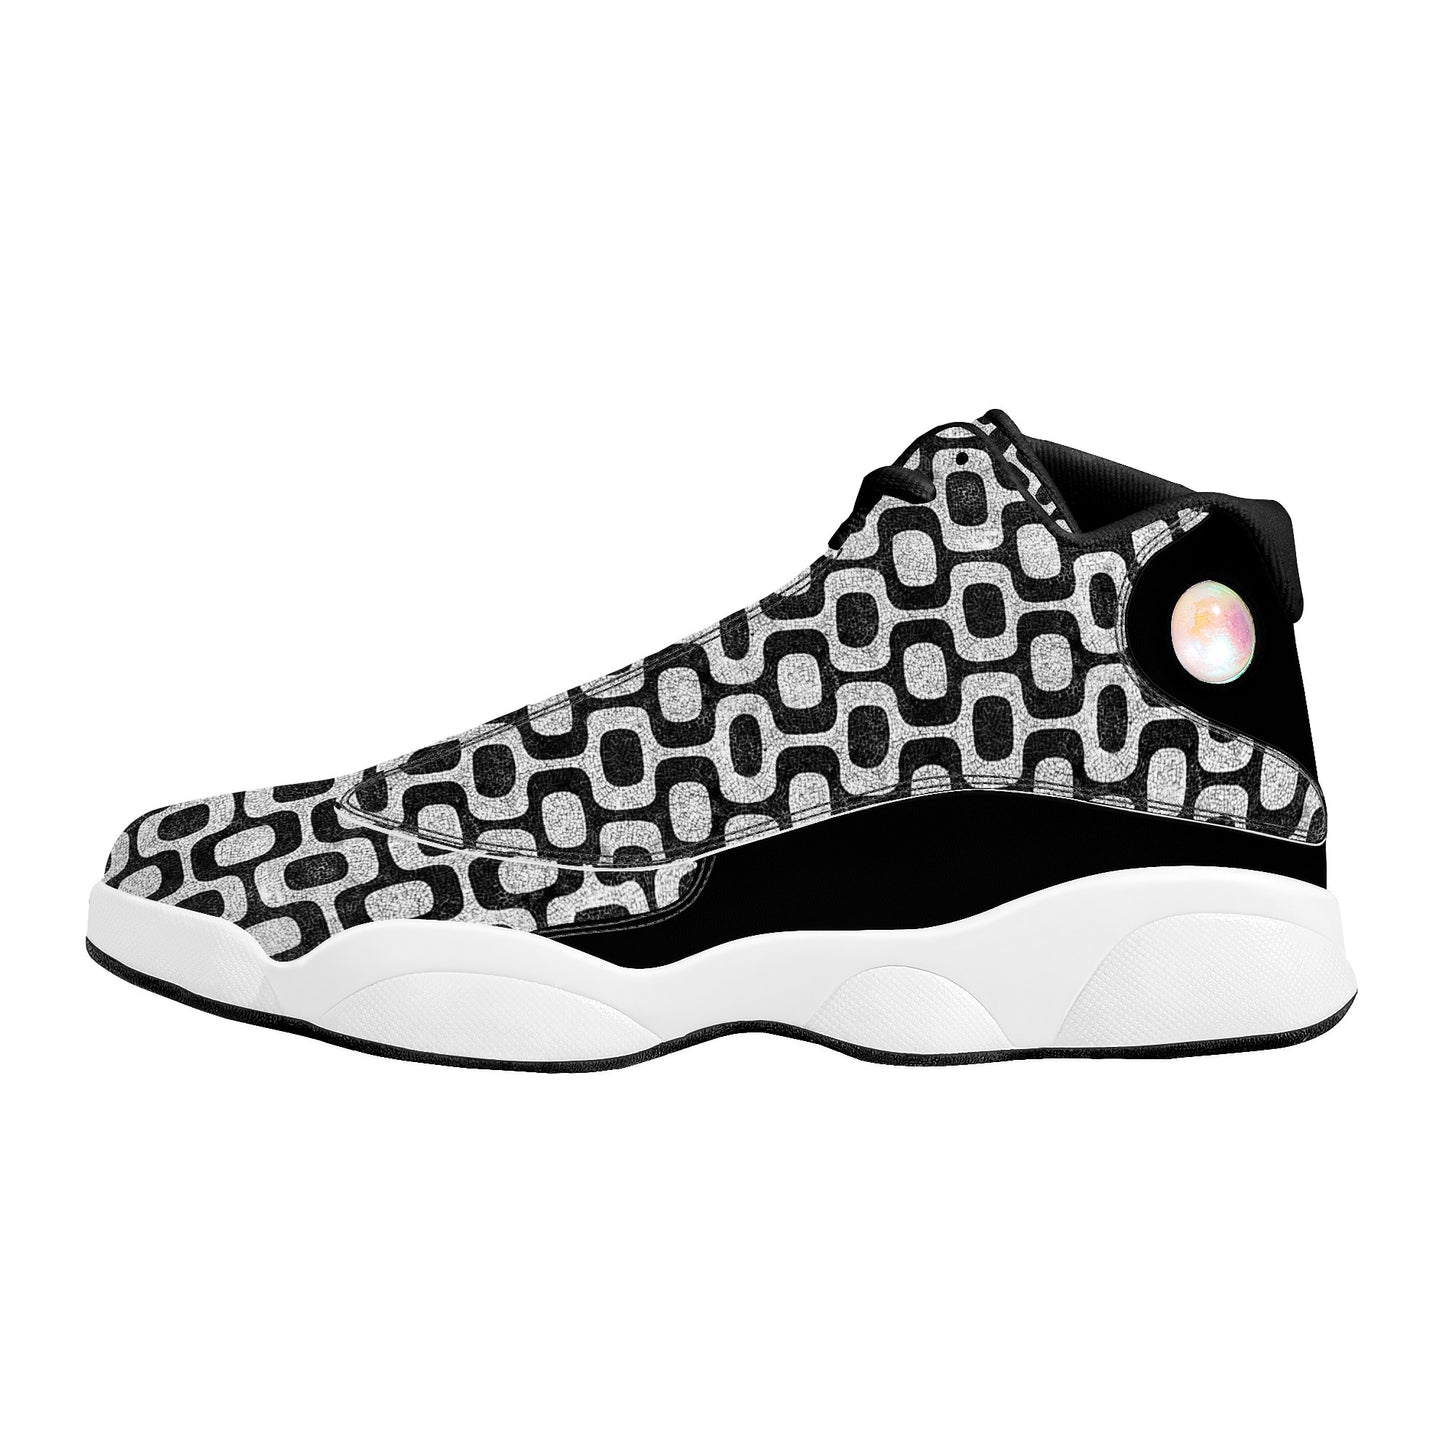 "Ipanema" Basketball Shoes